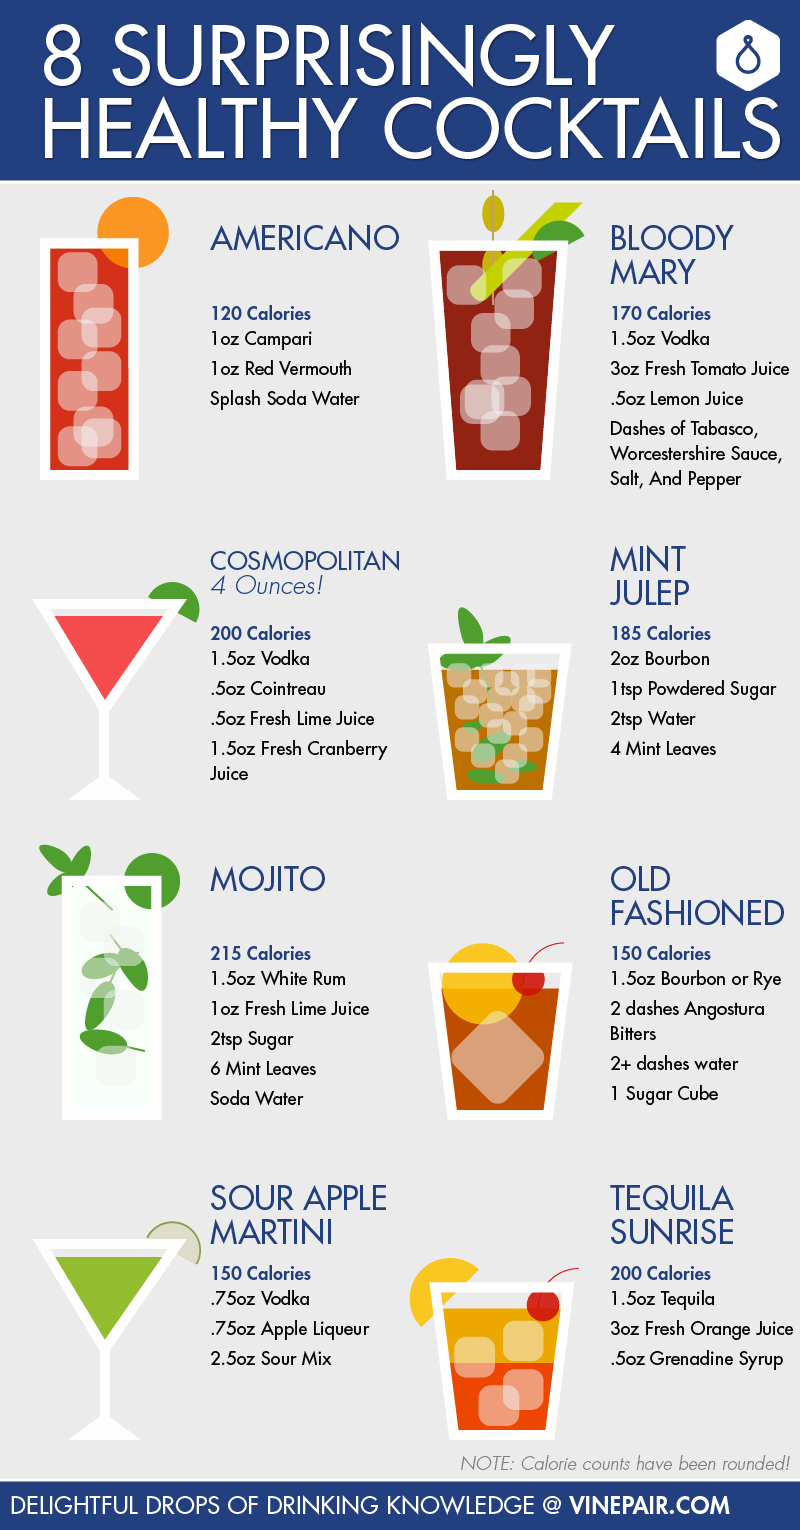 8 Surprisingly Healthy Cocktails